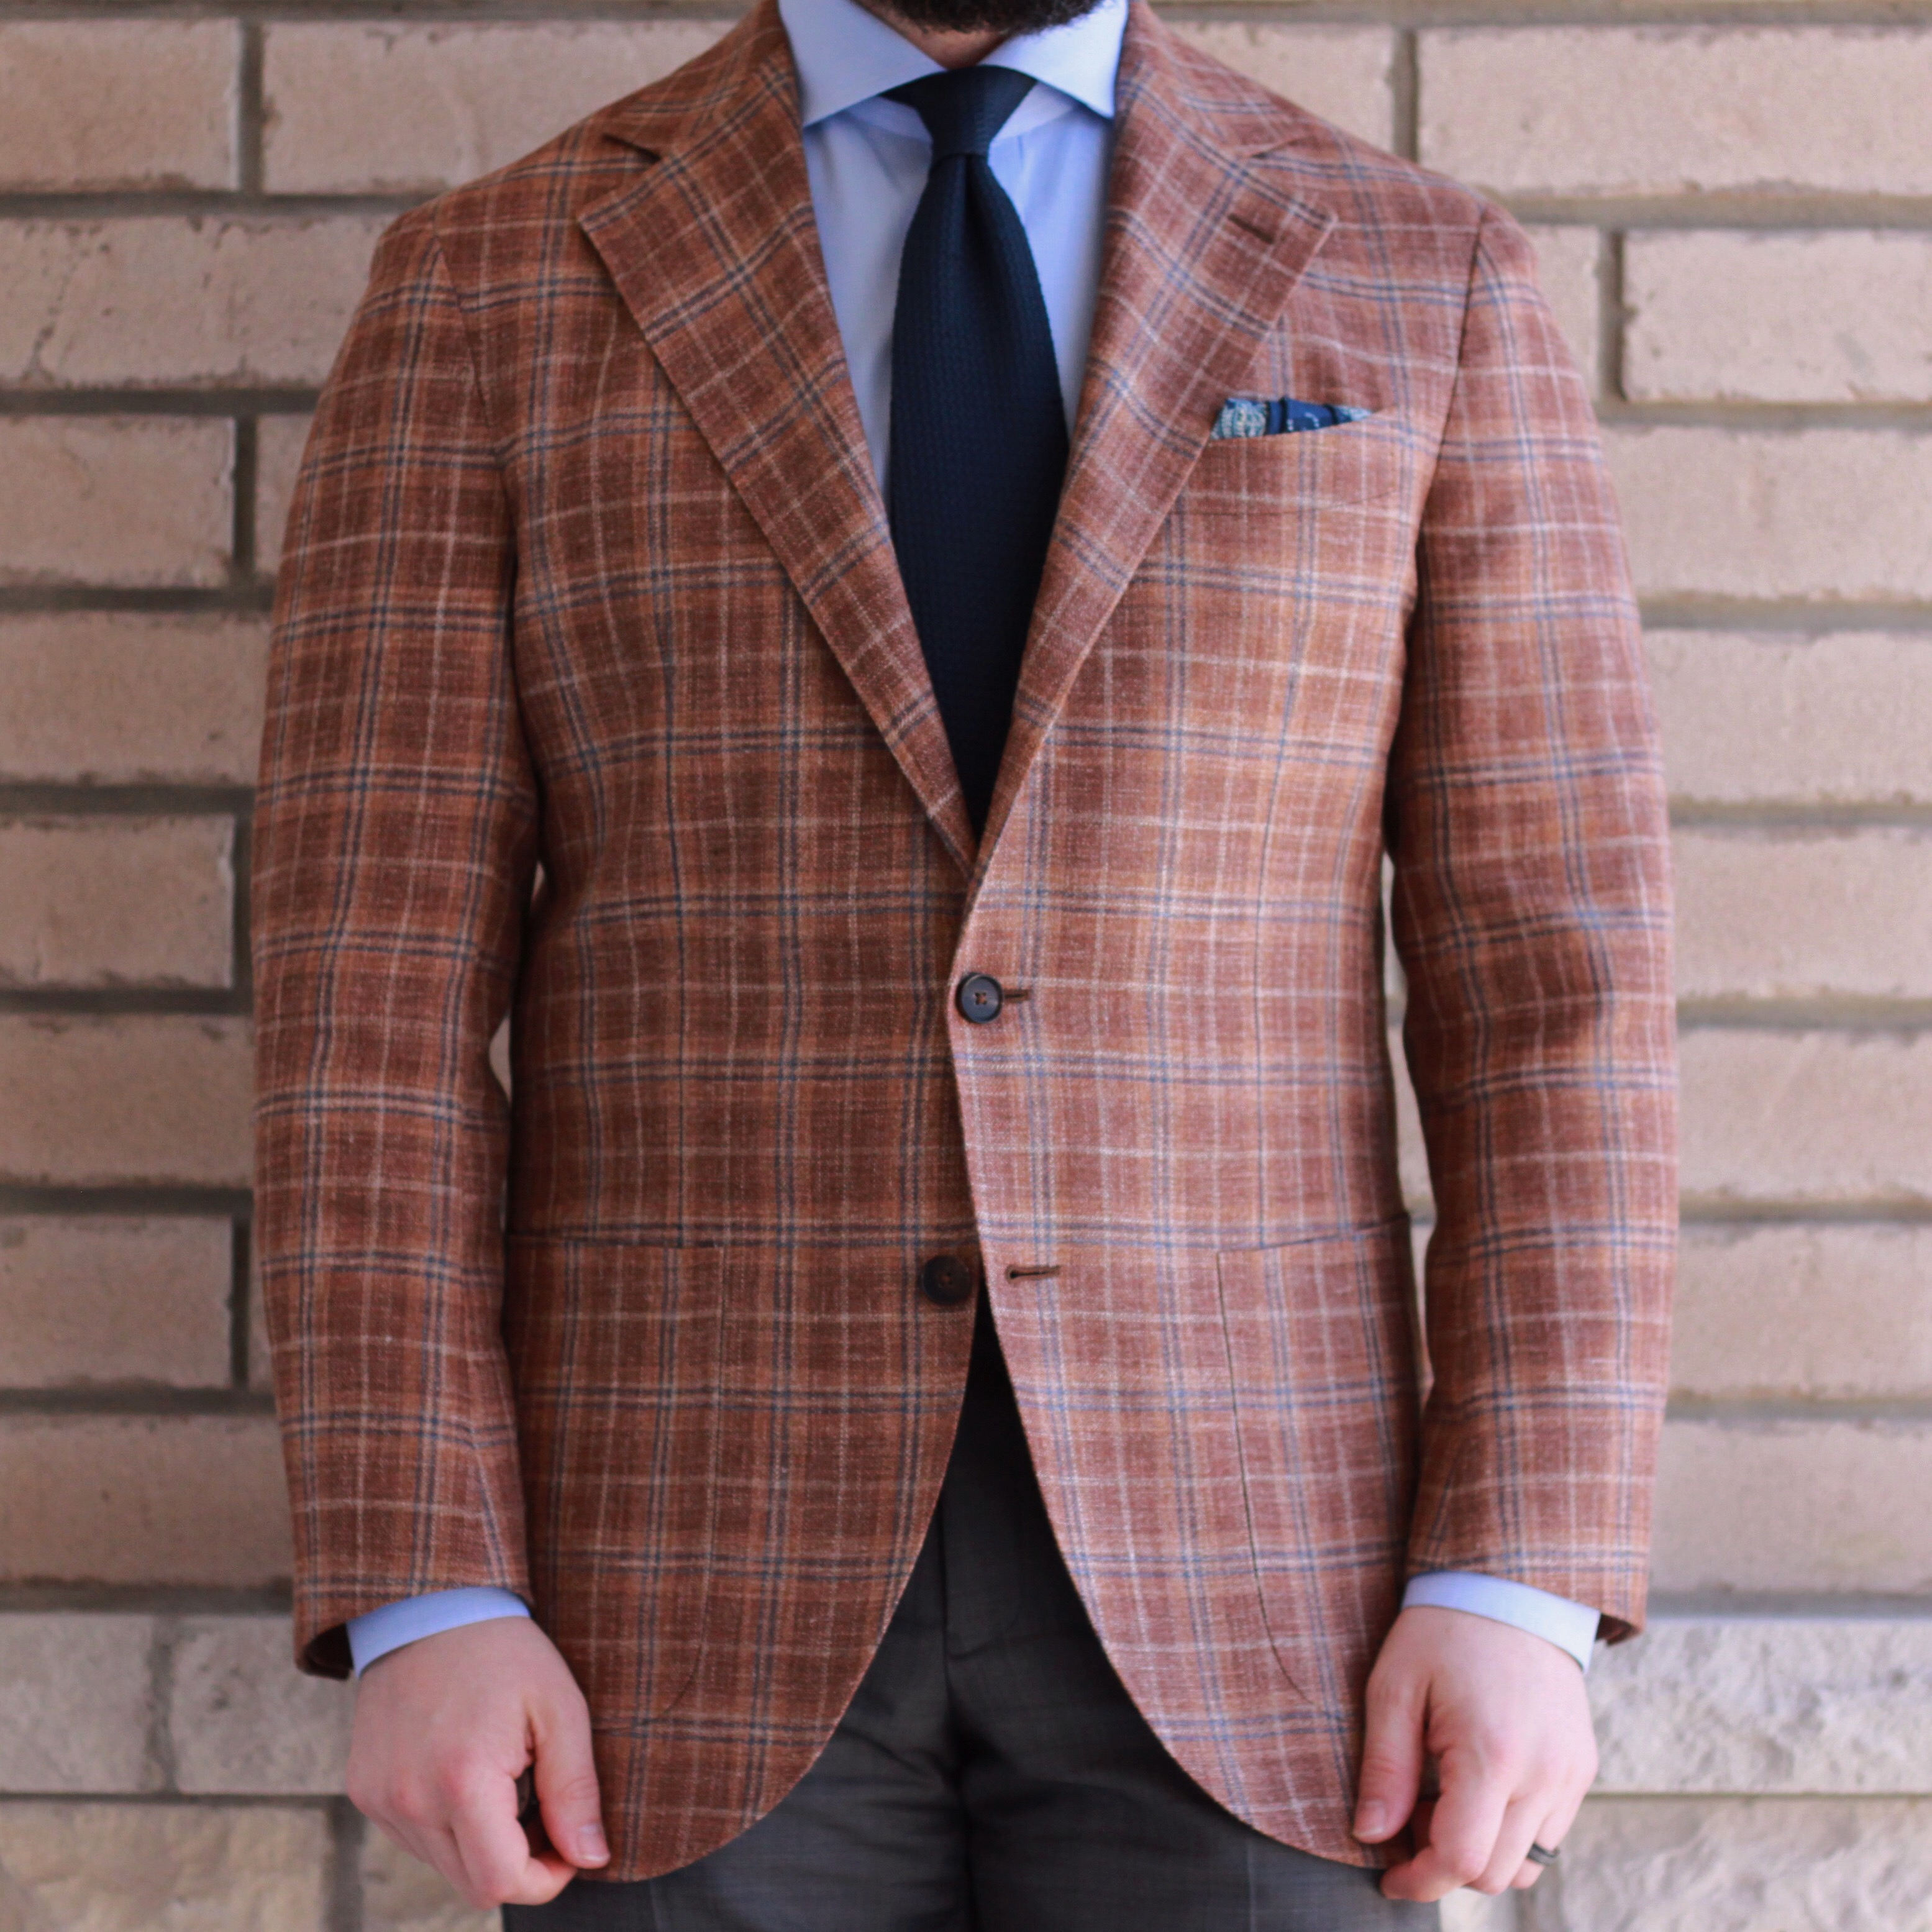 E. Thomas, spier mackay, sport coat, checked pattern, tie, pocket square